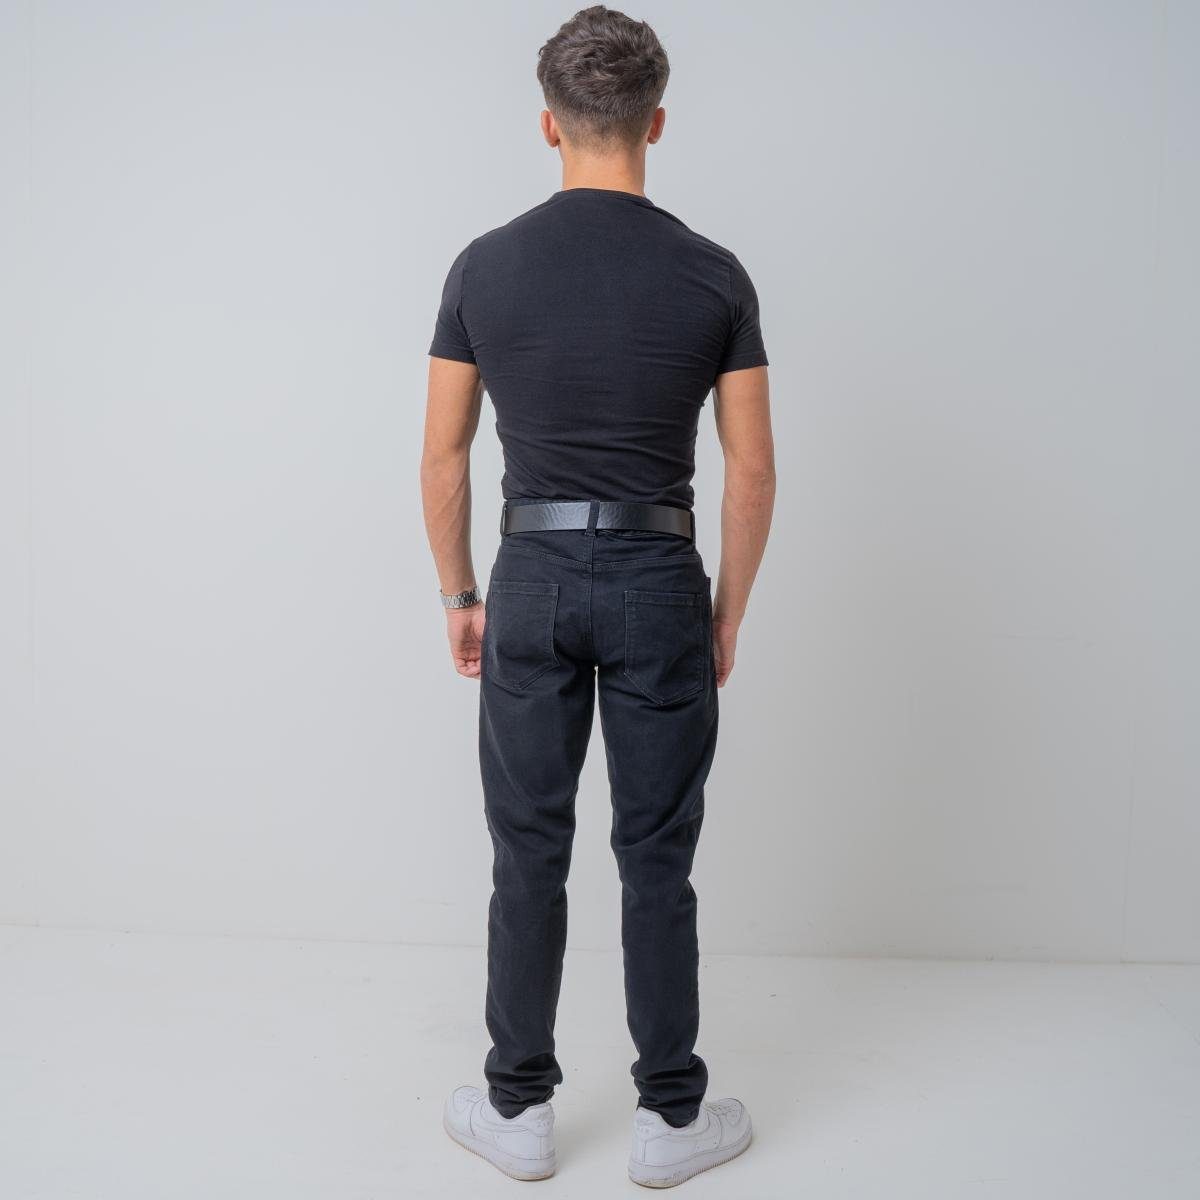 Jeans-Gürtel Hochwertiger He aus 4 Ledergürtel Tabac, Silber cm BELTINGER - Vollrindleder für Leder-Gürtel